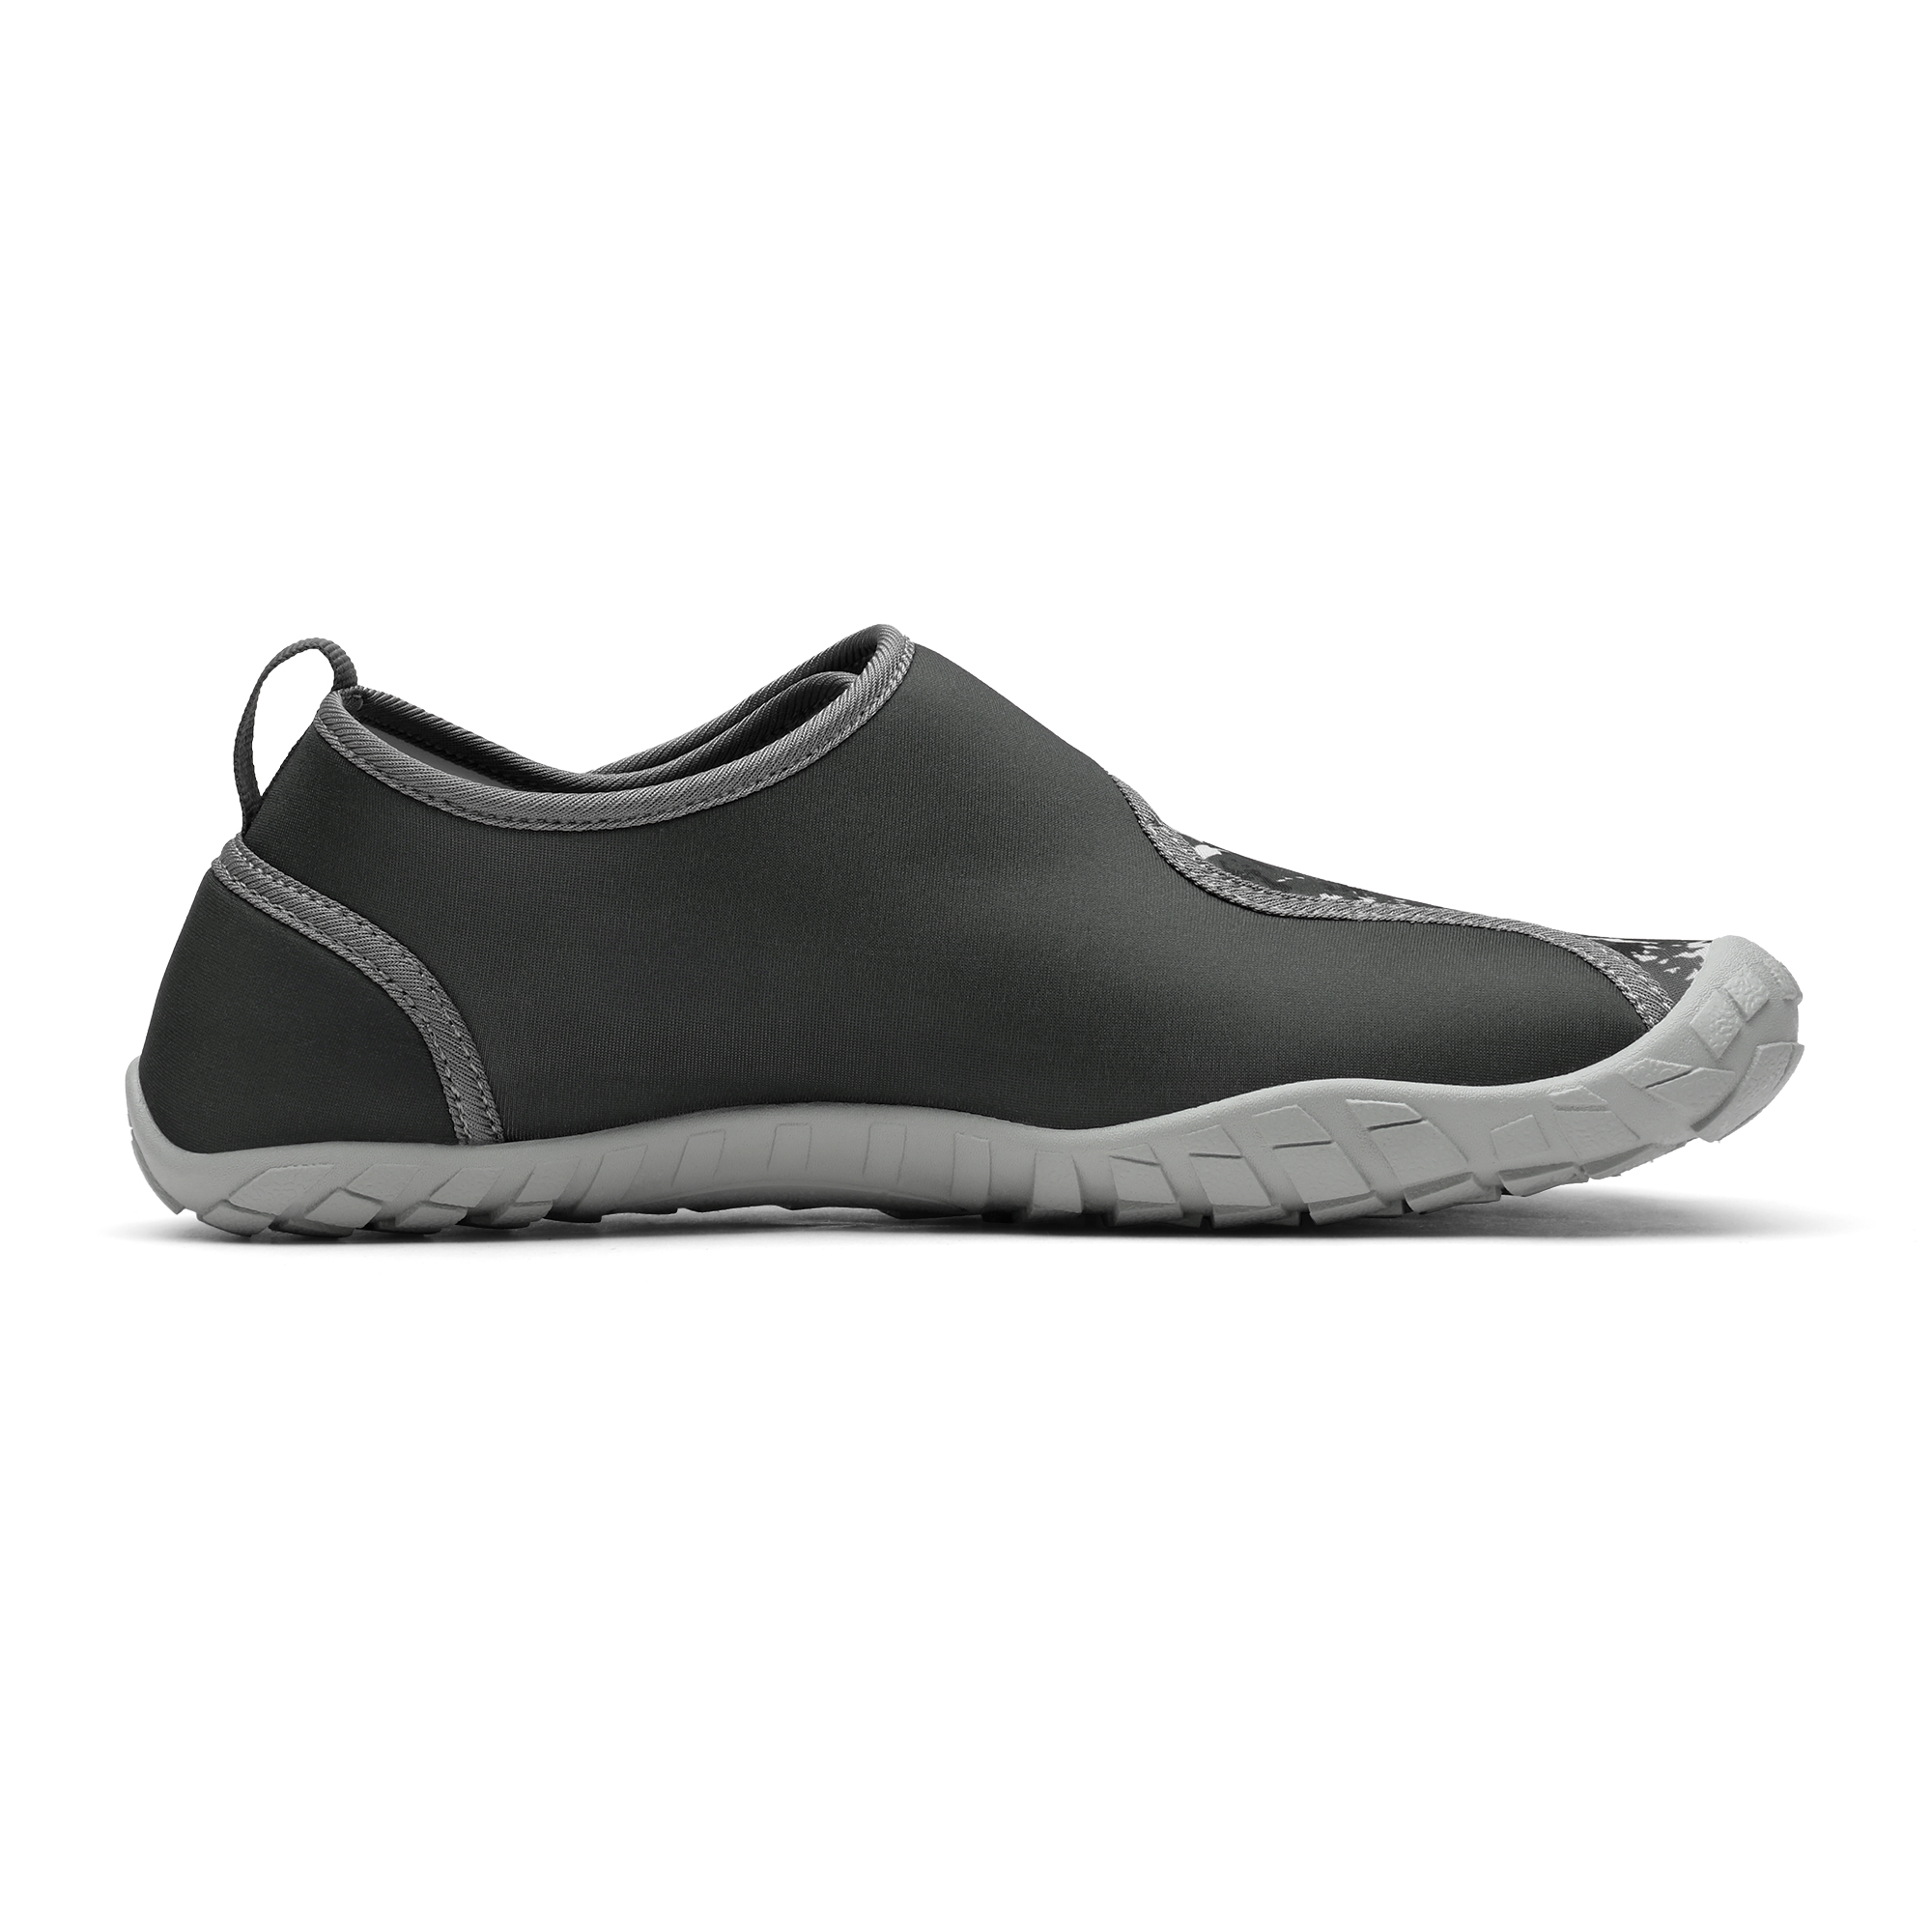 NORTIV 8 Men's Barefoot Water Shoes Lightweight Outdoor Sports Quick ...